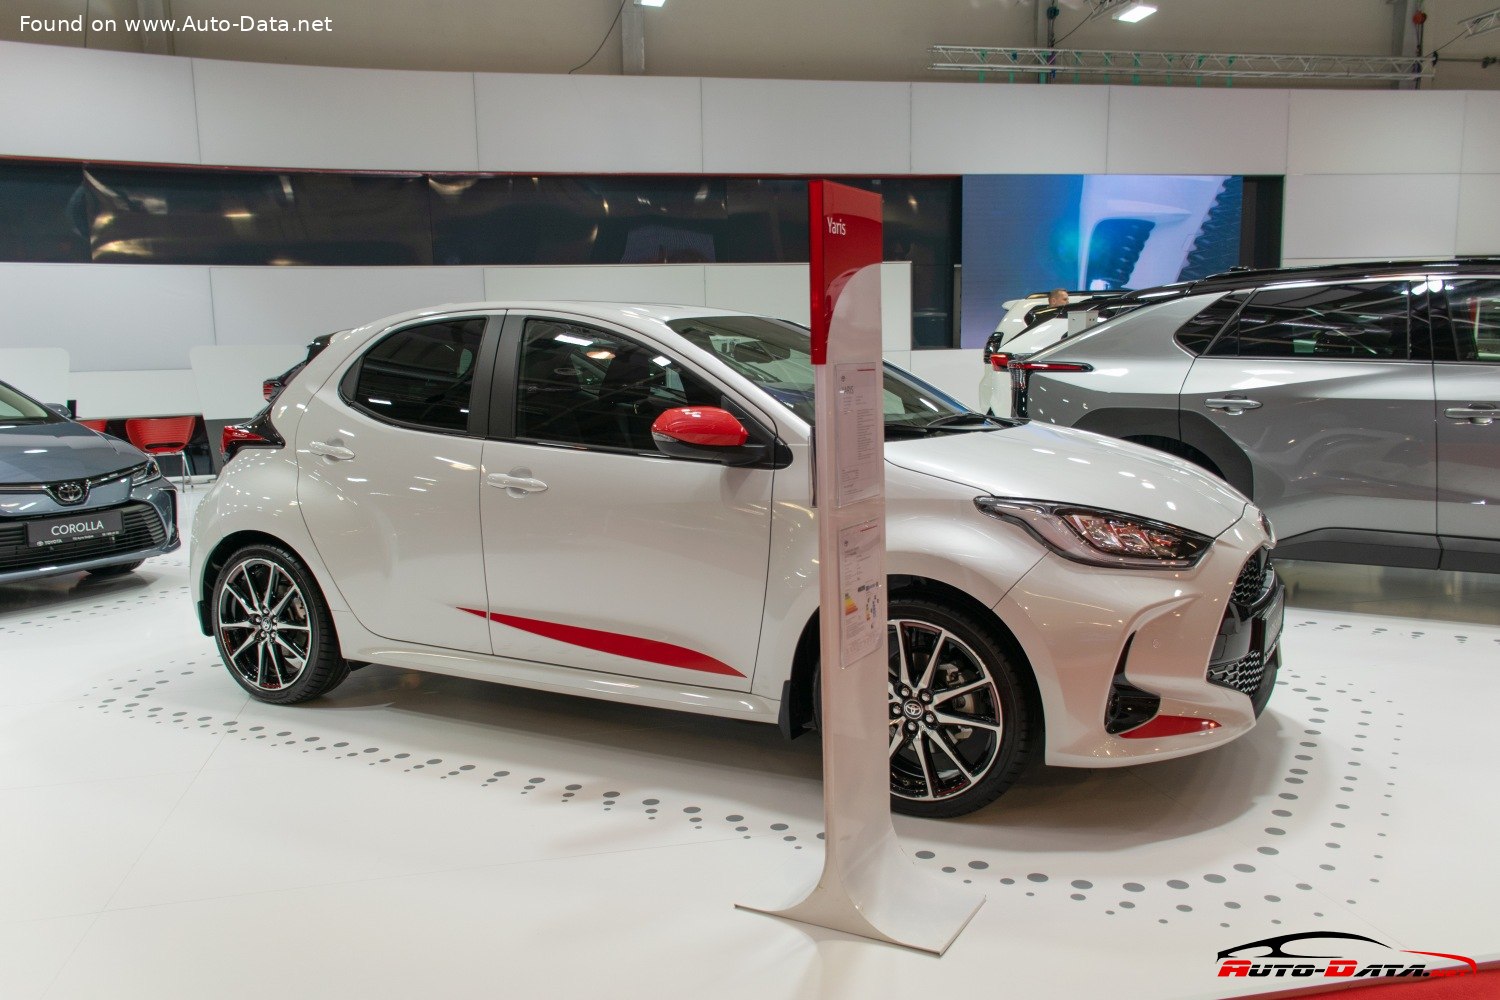 2020 Toyota Yaris (XP210) 1.5 (91 Hp) Hybrid e-CVT  Technical specs, data,  fuel consumption, Dimensions